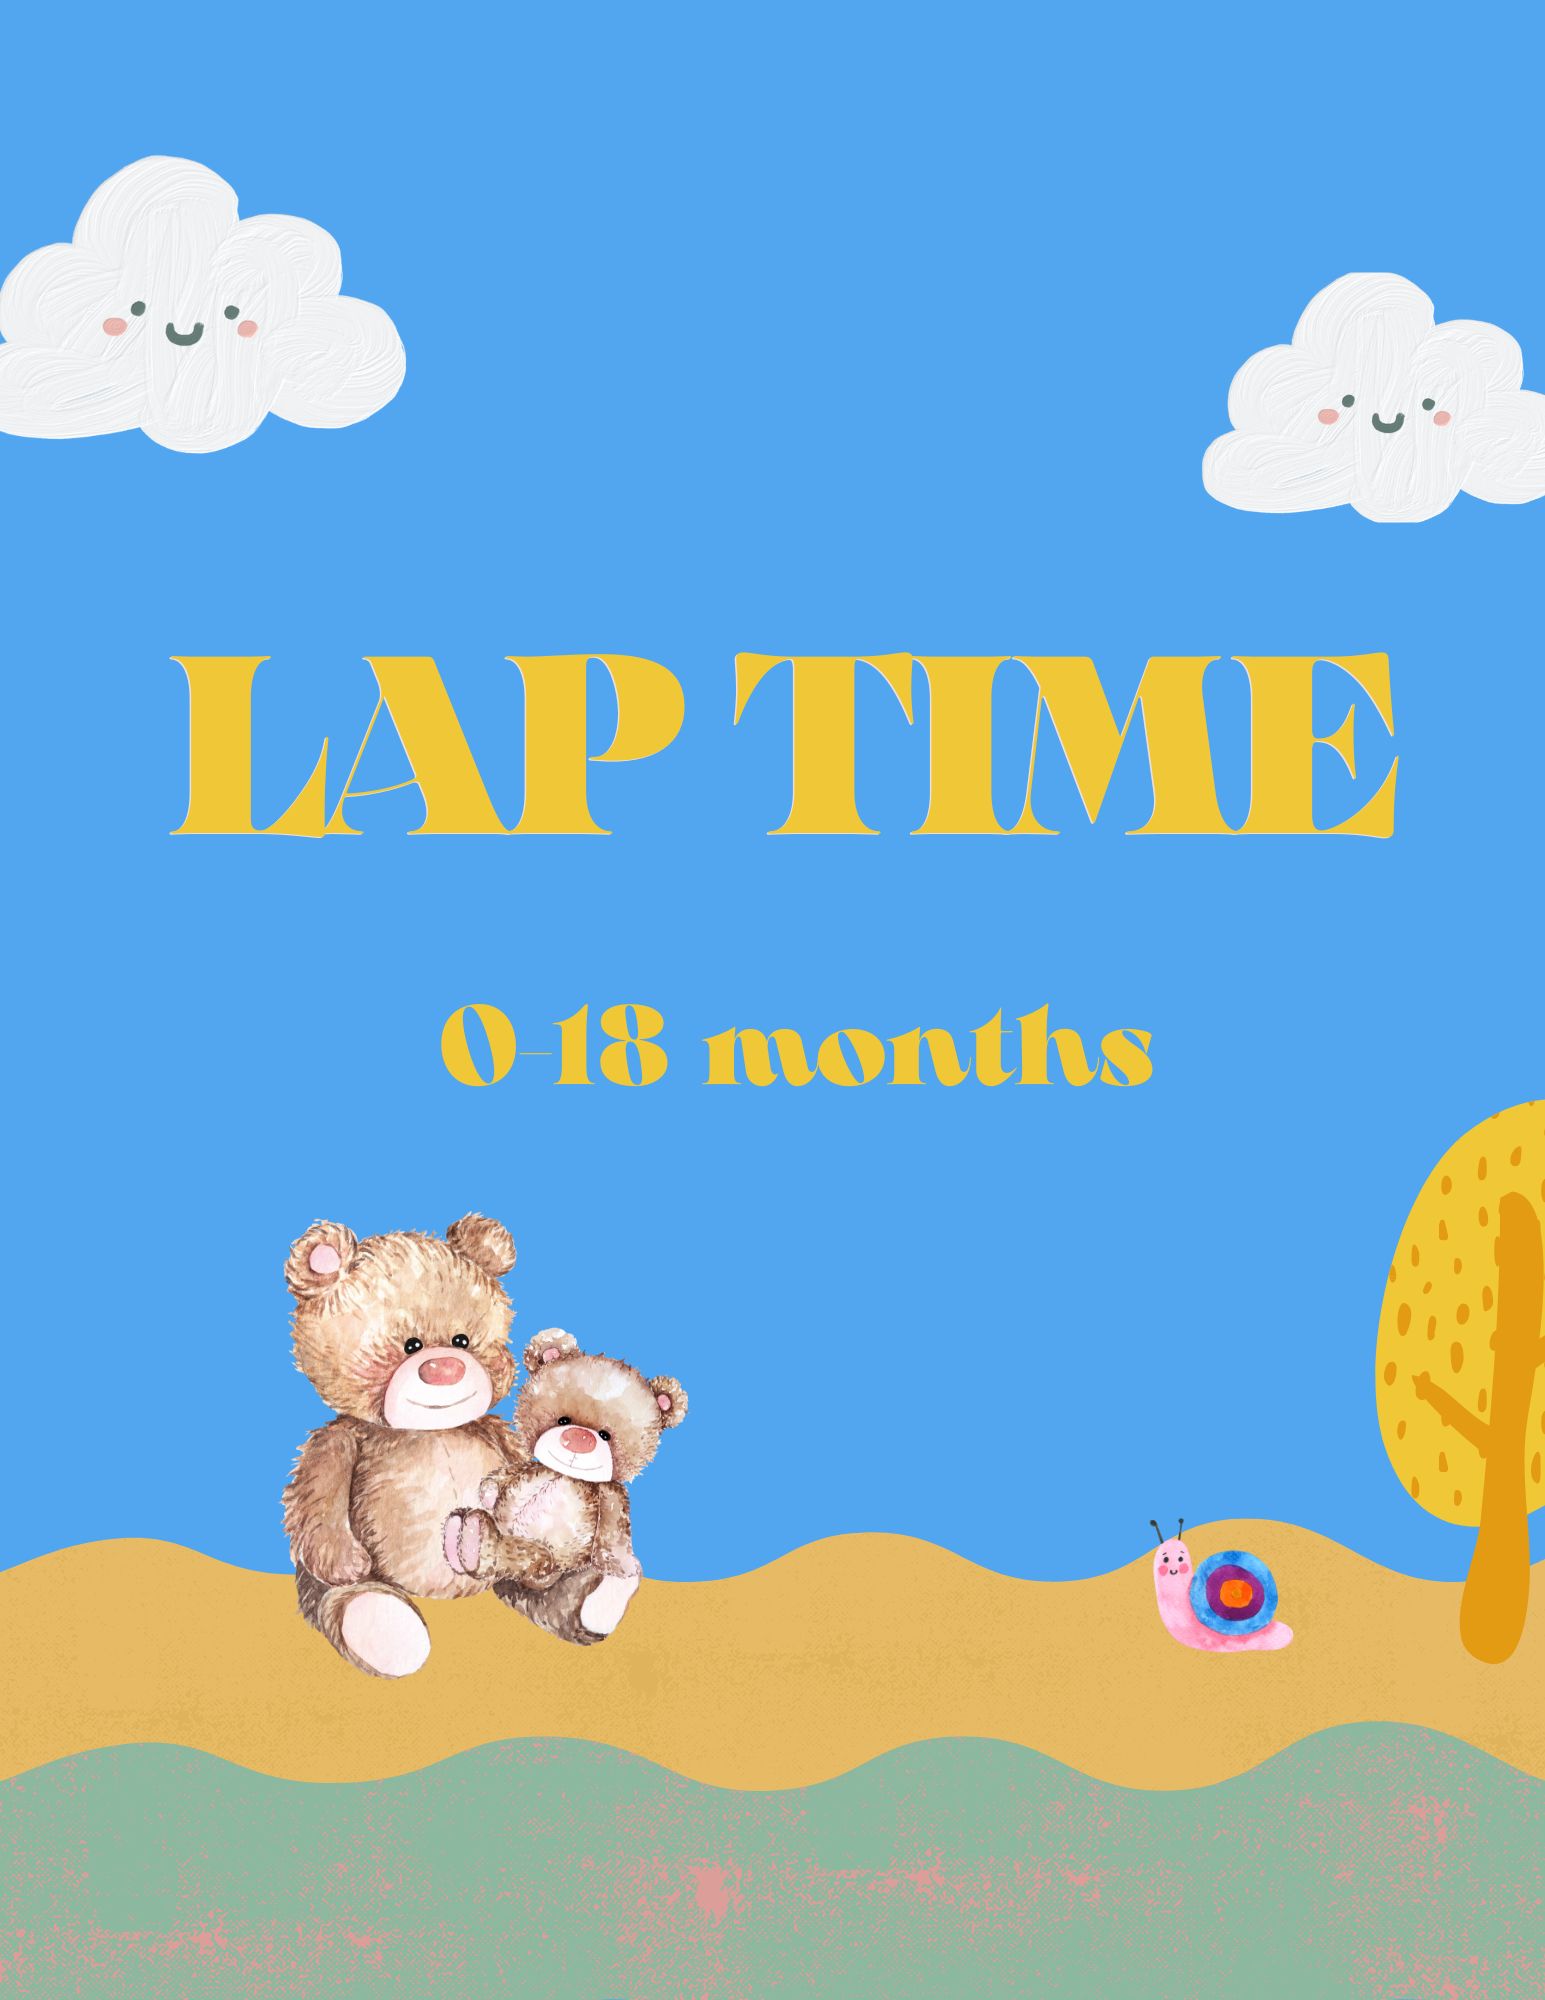 Lap Time 0-18 months